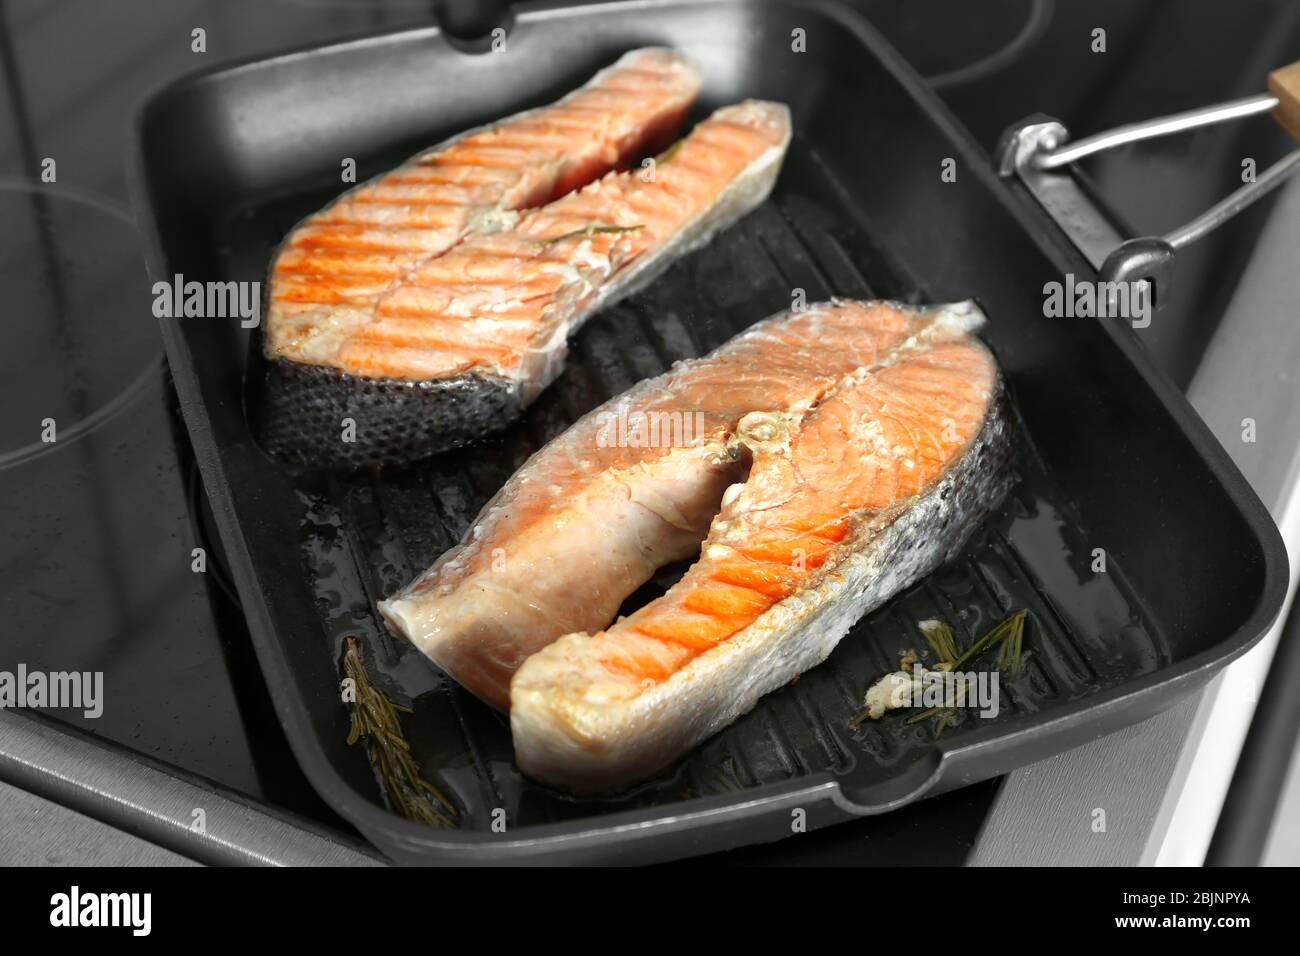 https://c8.alamy.com/comp/2BJNPYA/grill-pan-with-delicious-salmon-steaks-on-stove-in-kitchen-2BJNPYA.jpg